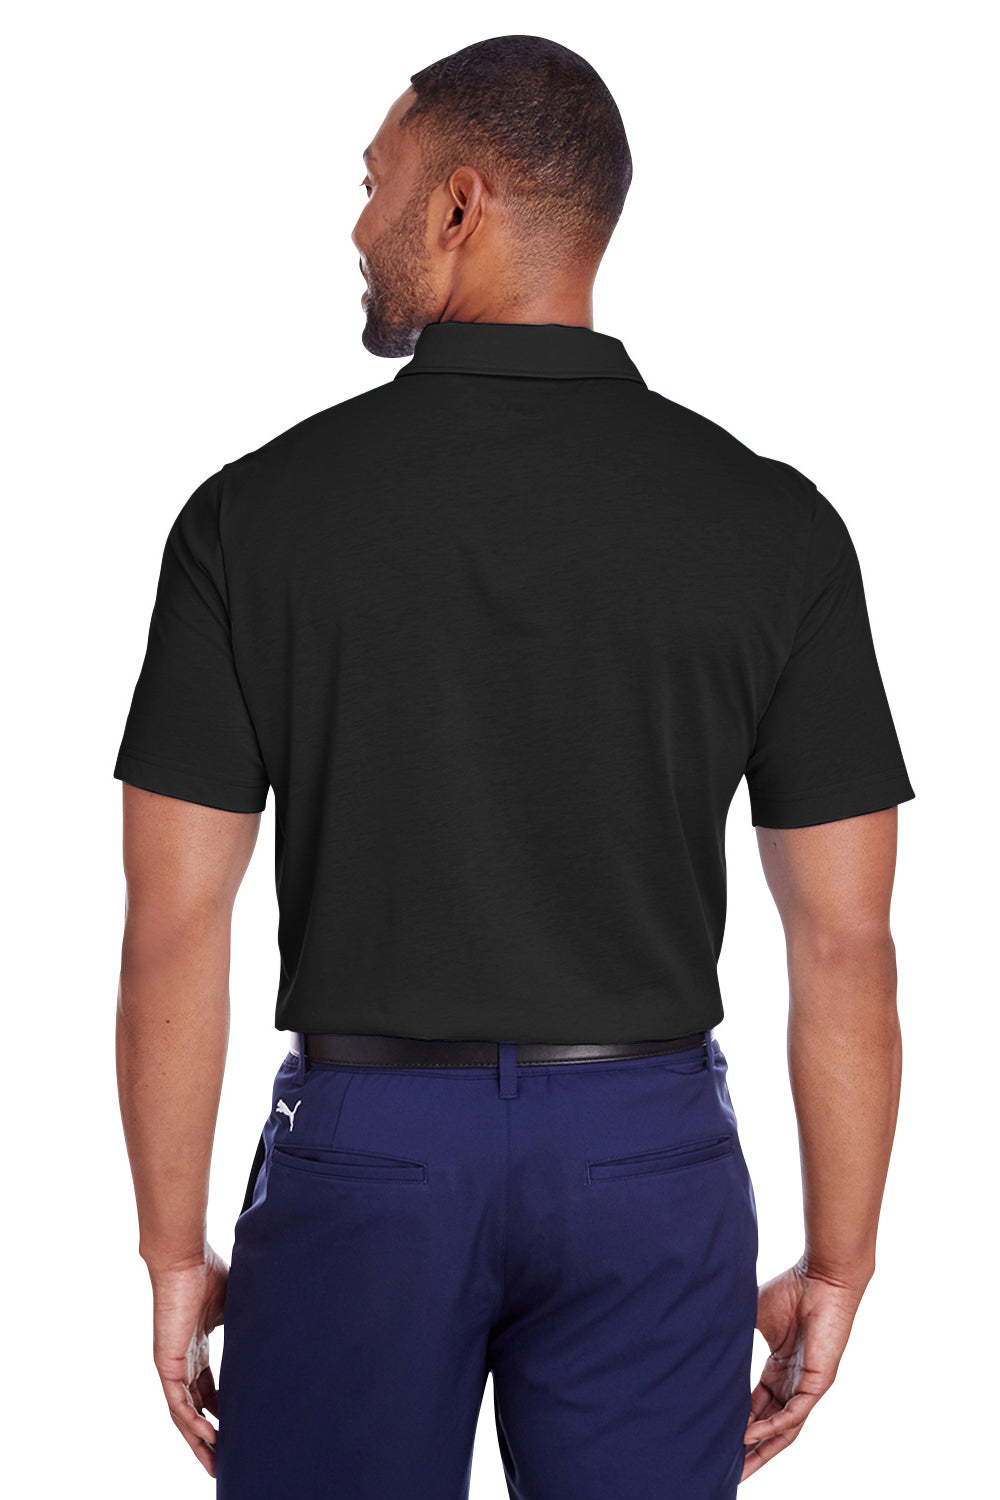 Puma 596920 Mens Fusion Performance Moisture Wicking Short Sleeve Polo Shirt Black Back